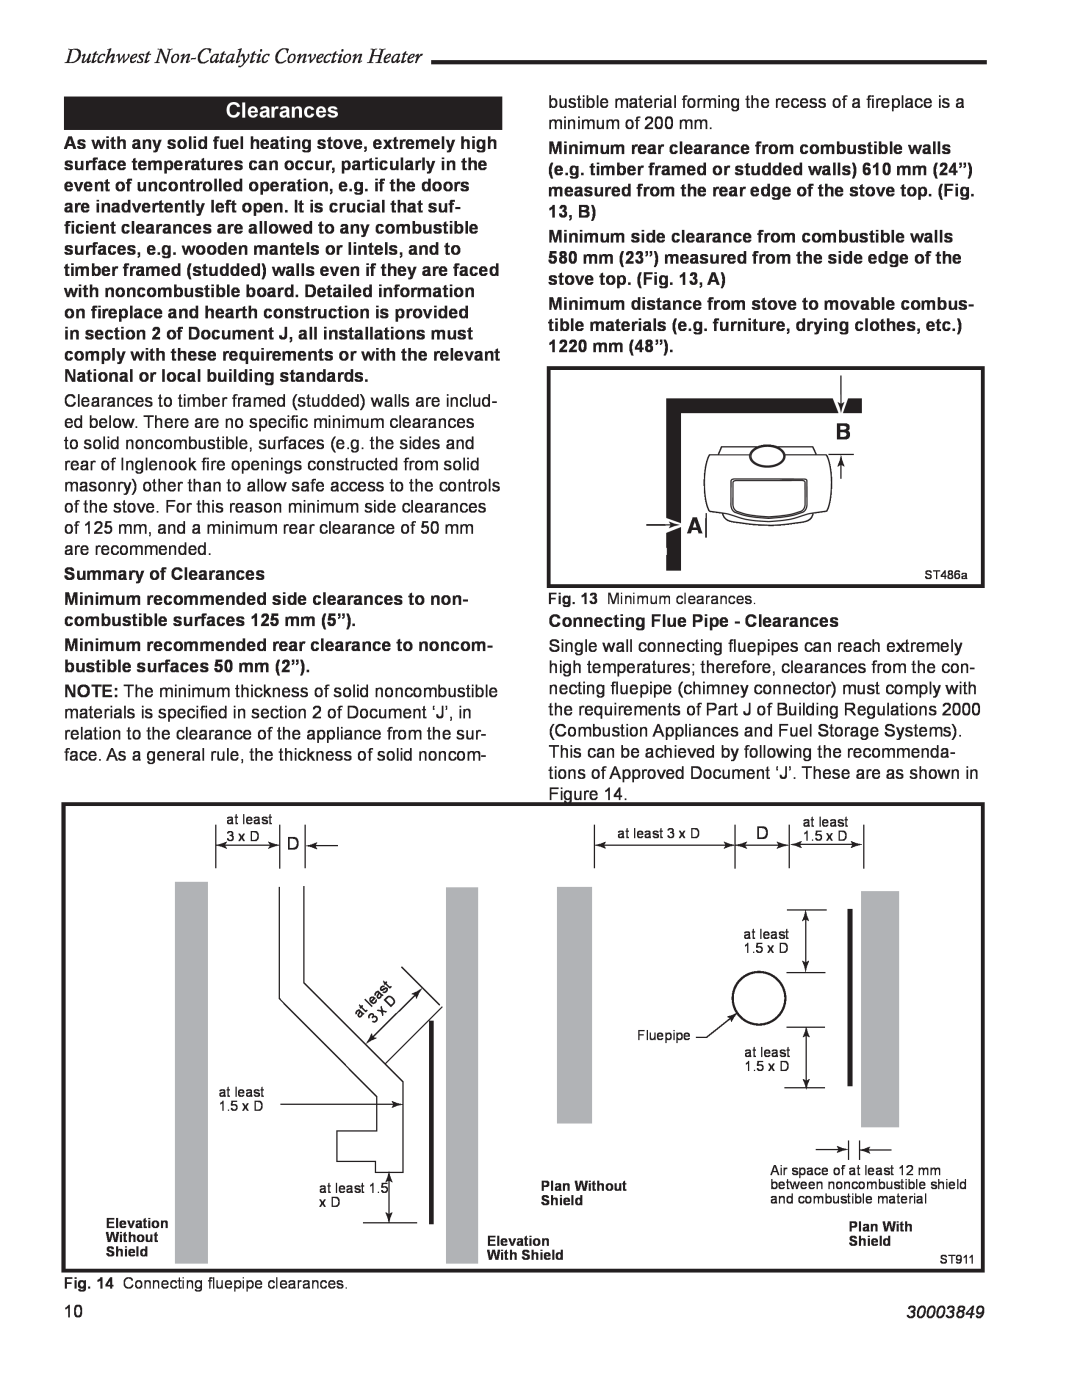 Vermont Casting 2477CE manual Clearances, Dutchwest Non-CatalyticConvection Heater, 30003849 